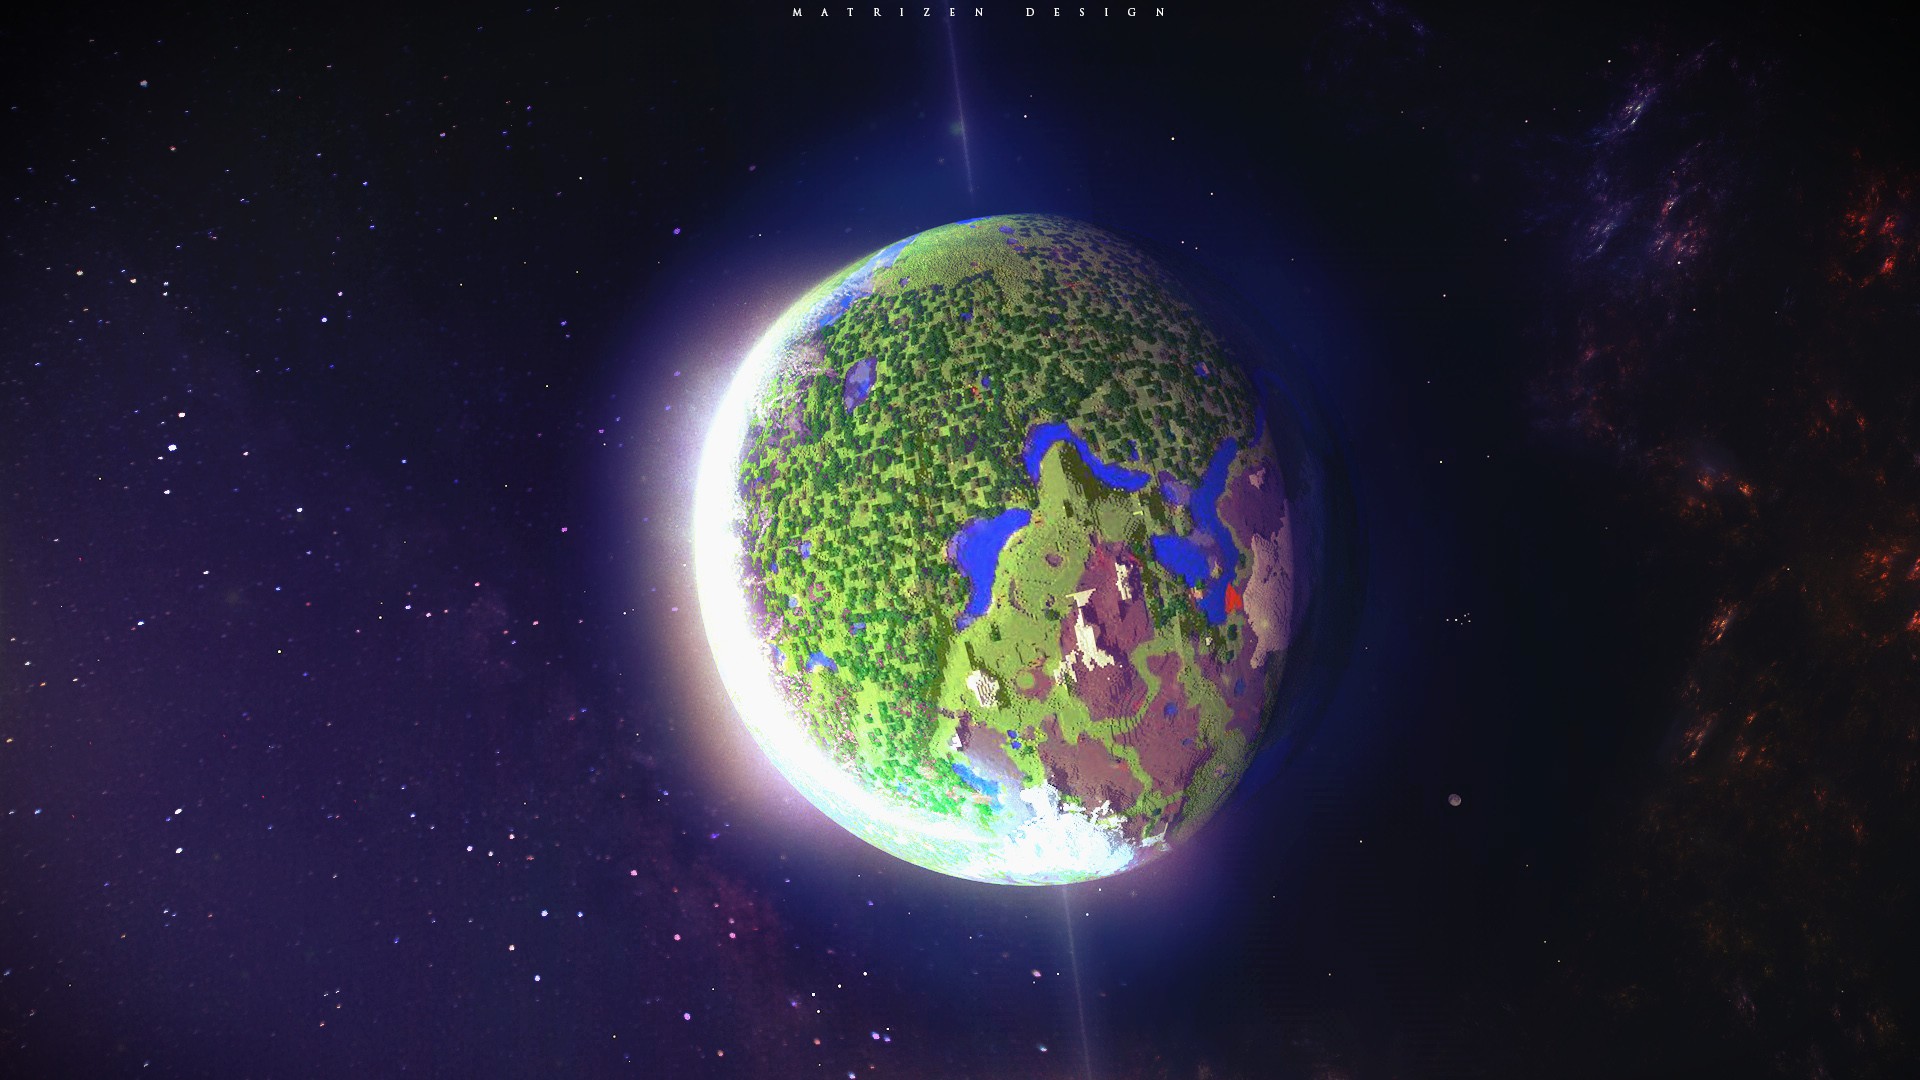 game empire earth full version